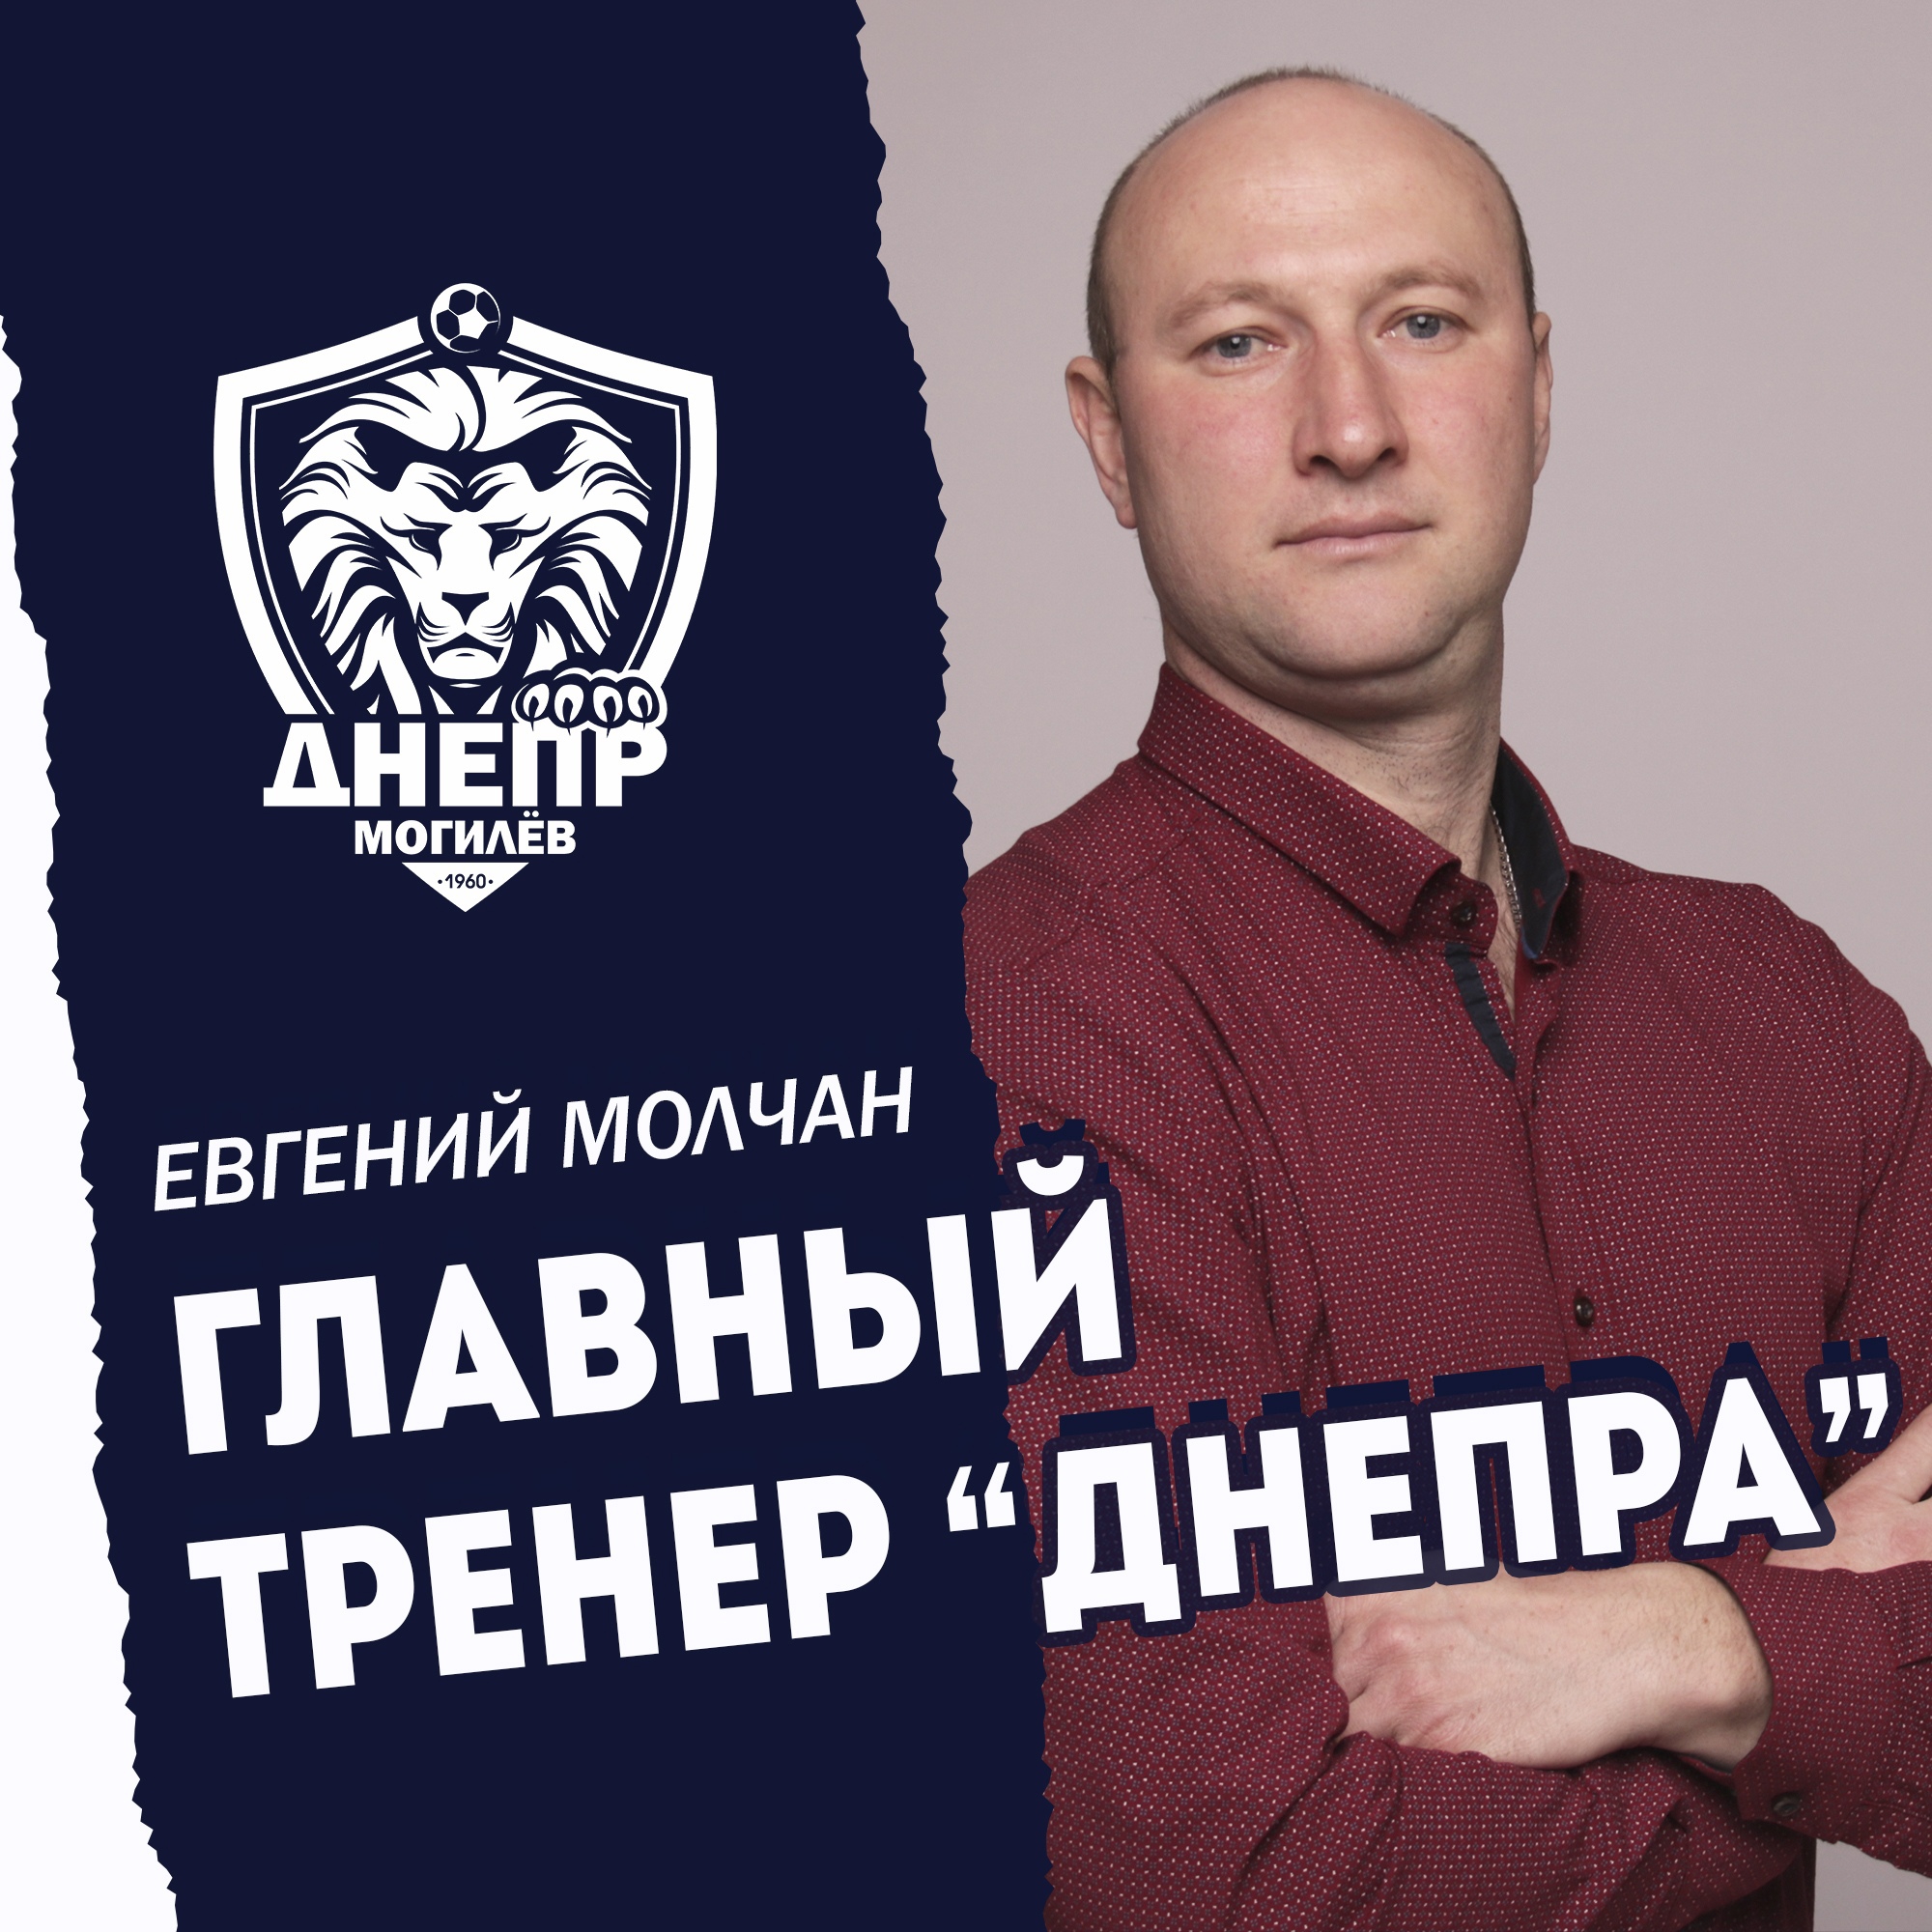 Евгений Молчан - главный тренер Днепра